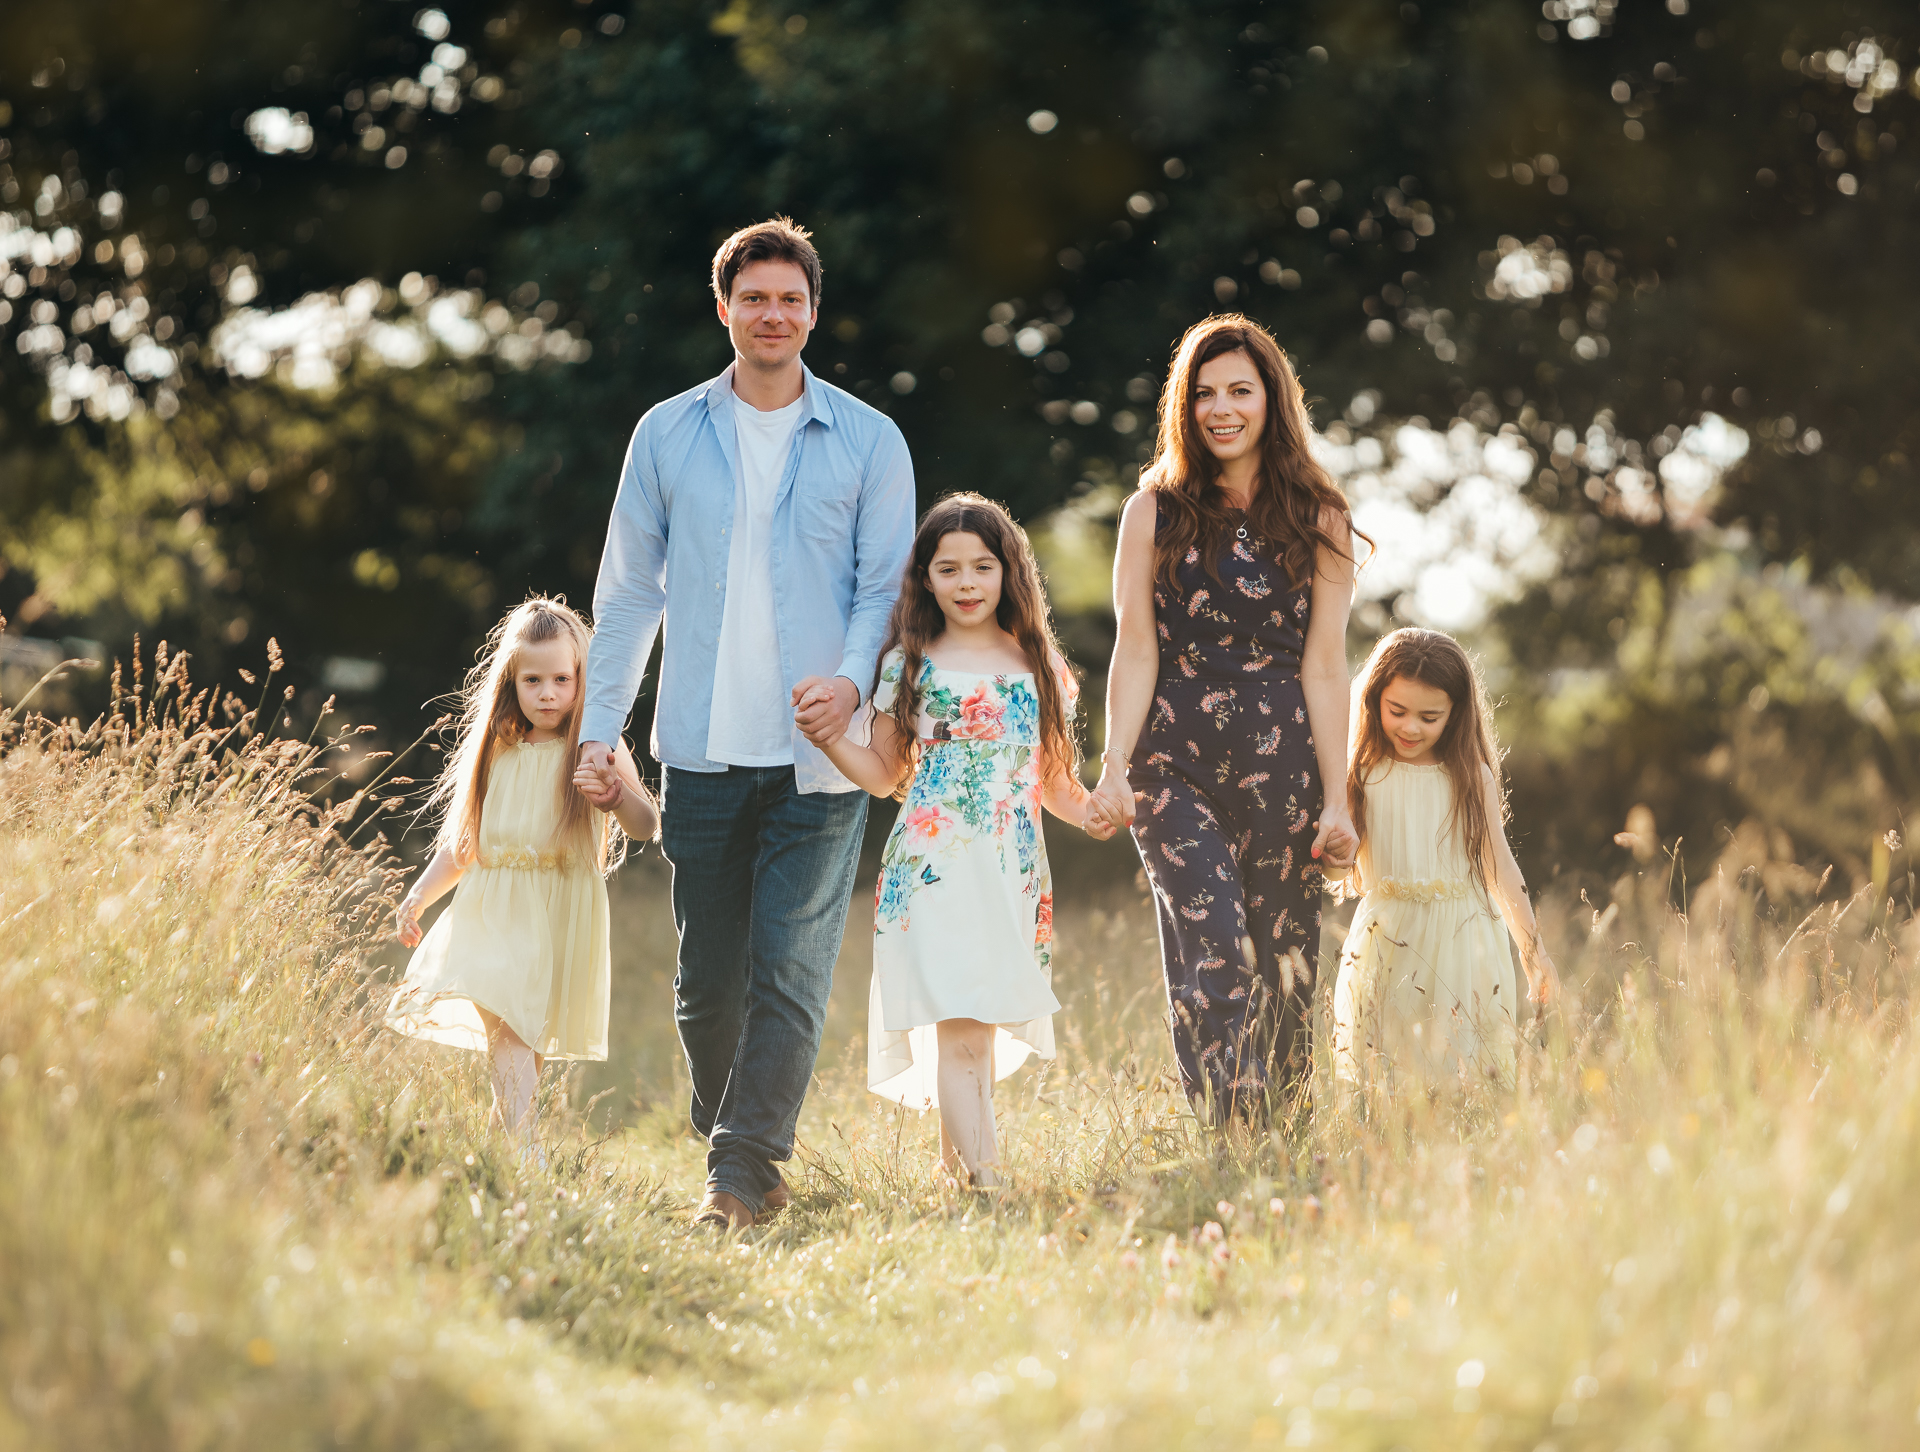 Family portrait photography - outdoor location portrait